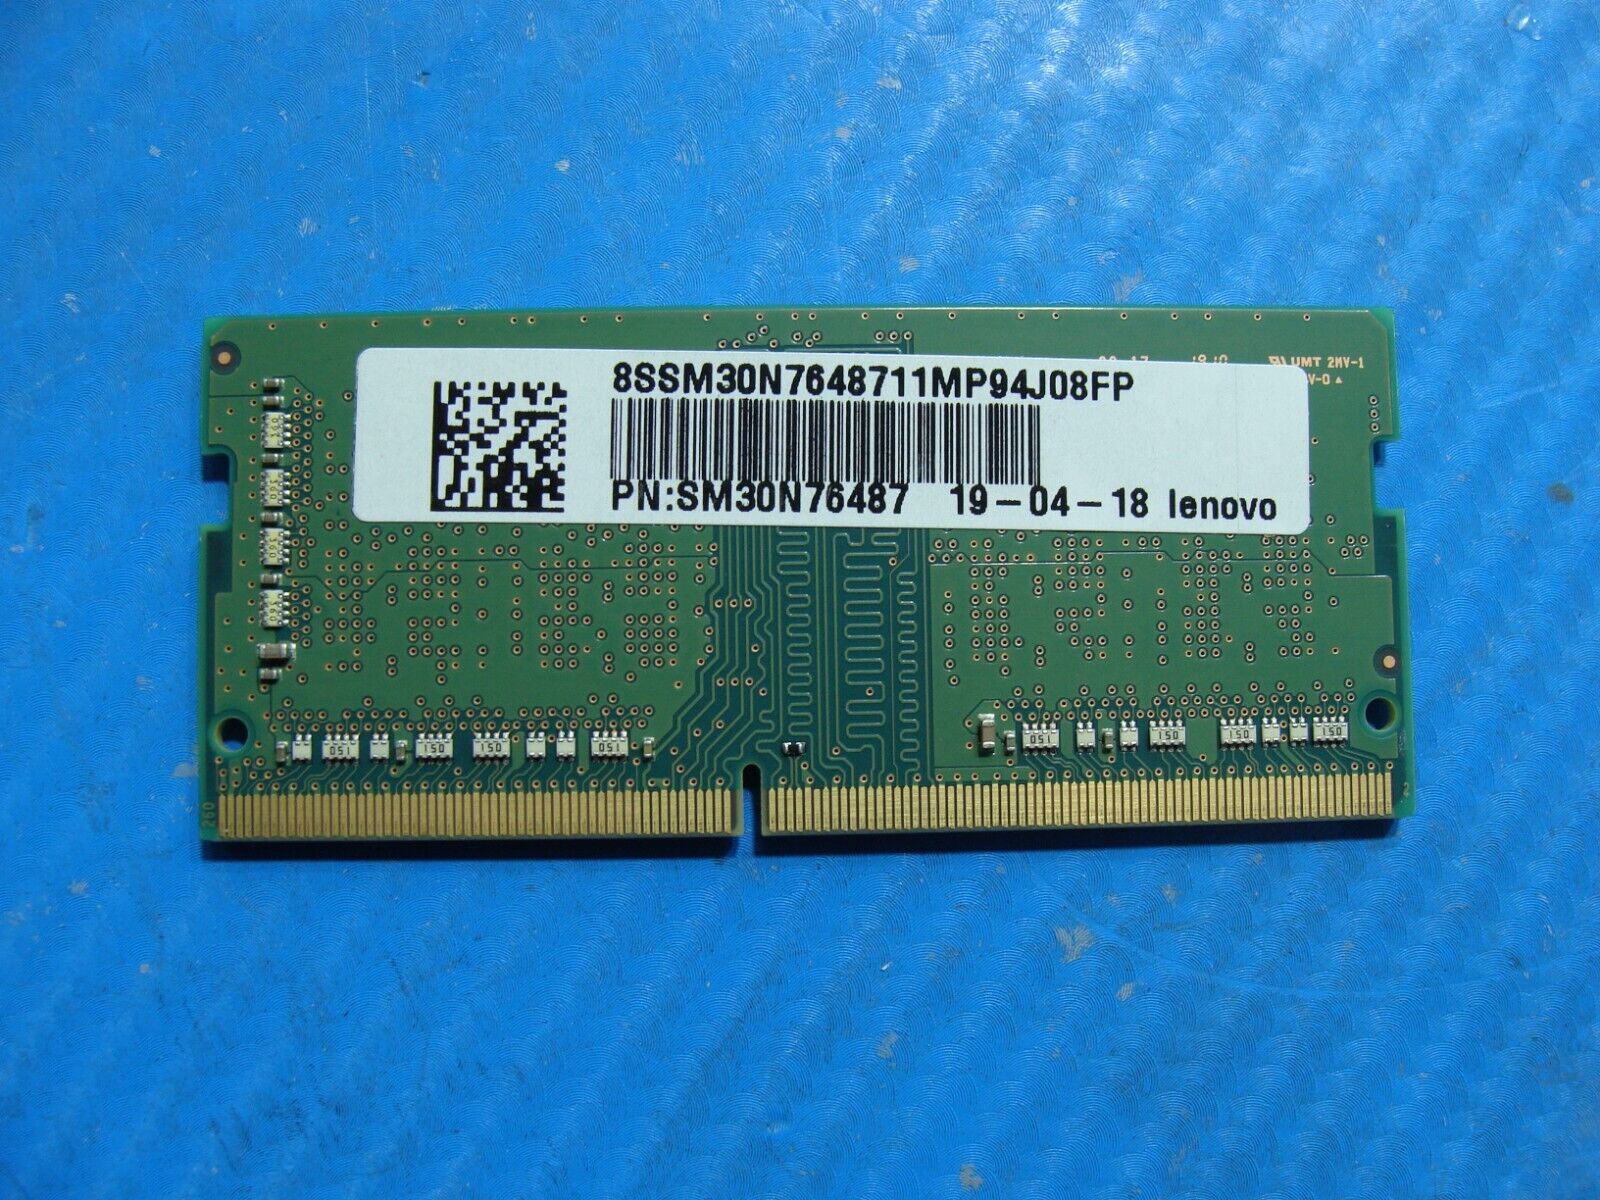 Lenovo Flex-14AP Samsung 4GB 1Rx16 PC4-2666V SO-DIMM Memory RAM M471A5244CB0-CTD